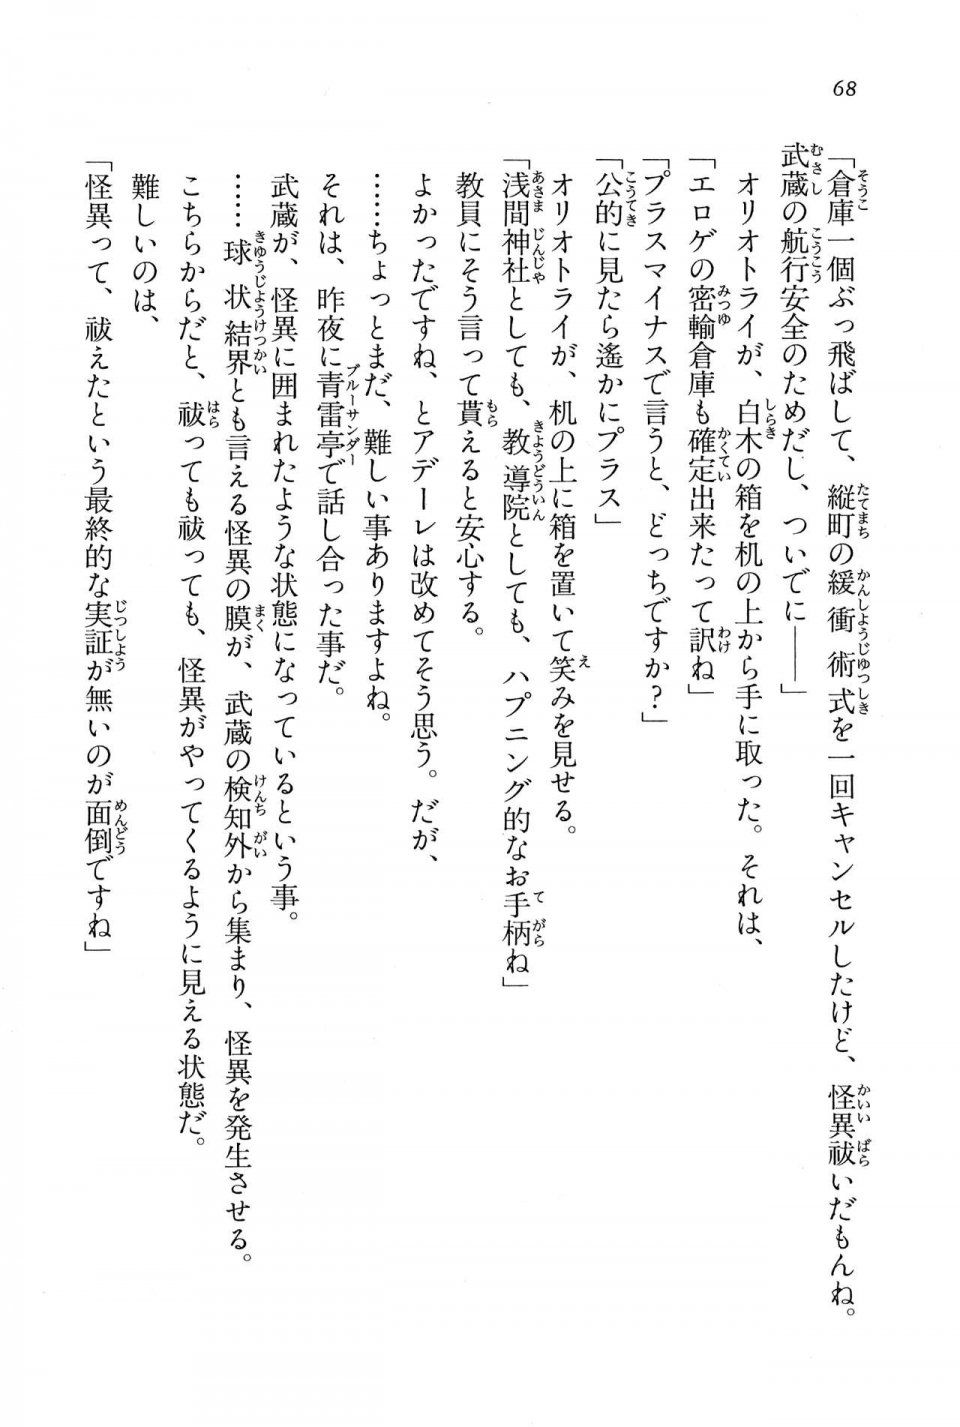 Kyoukai Senjou no Horizon BD Special Mininovel Vol 6(3B) - Photo #72